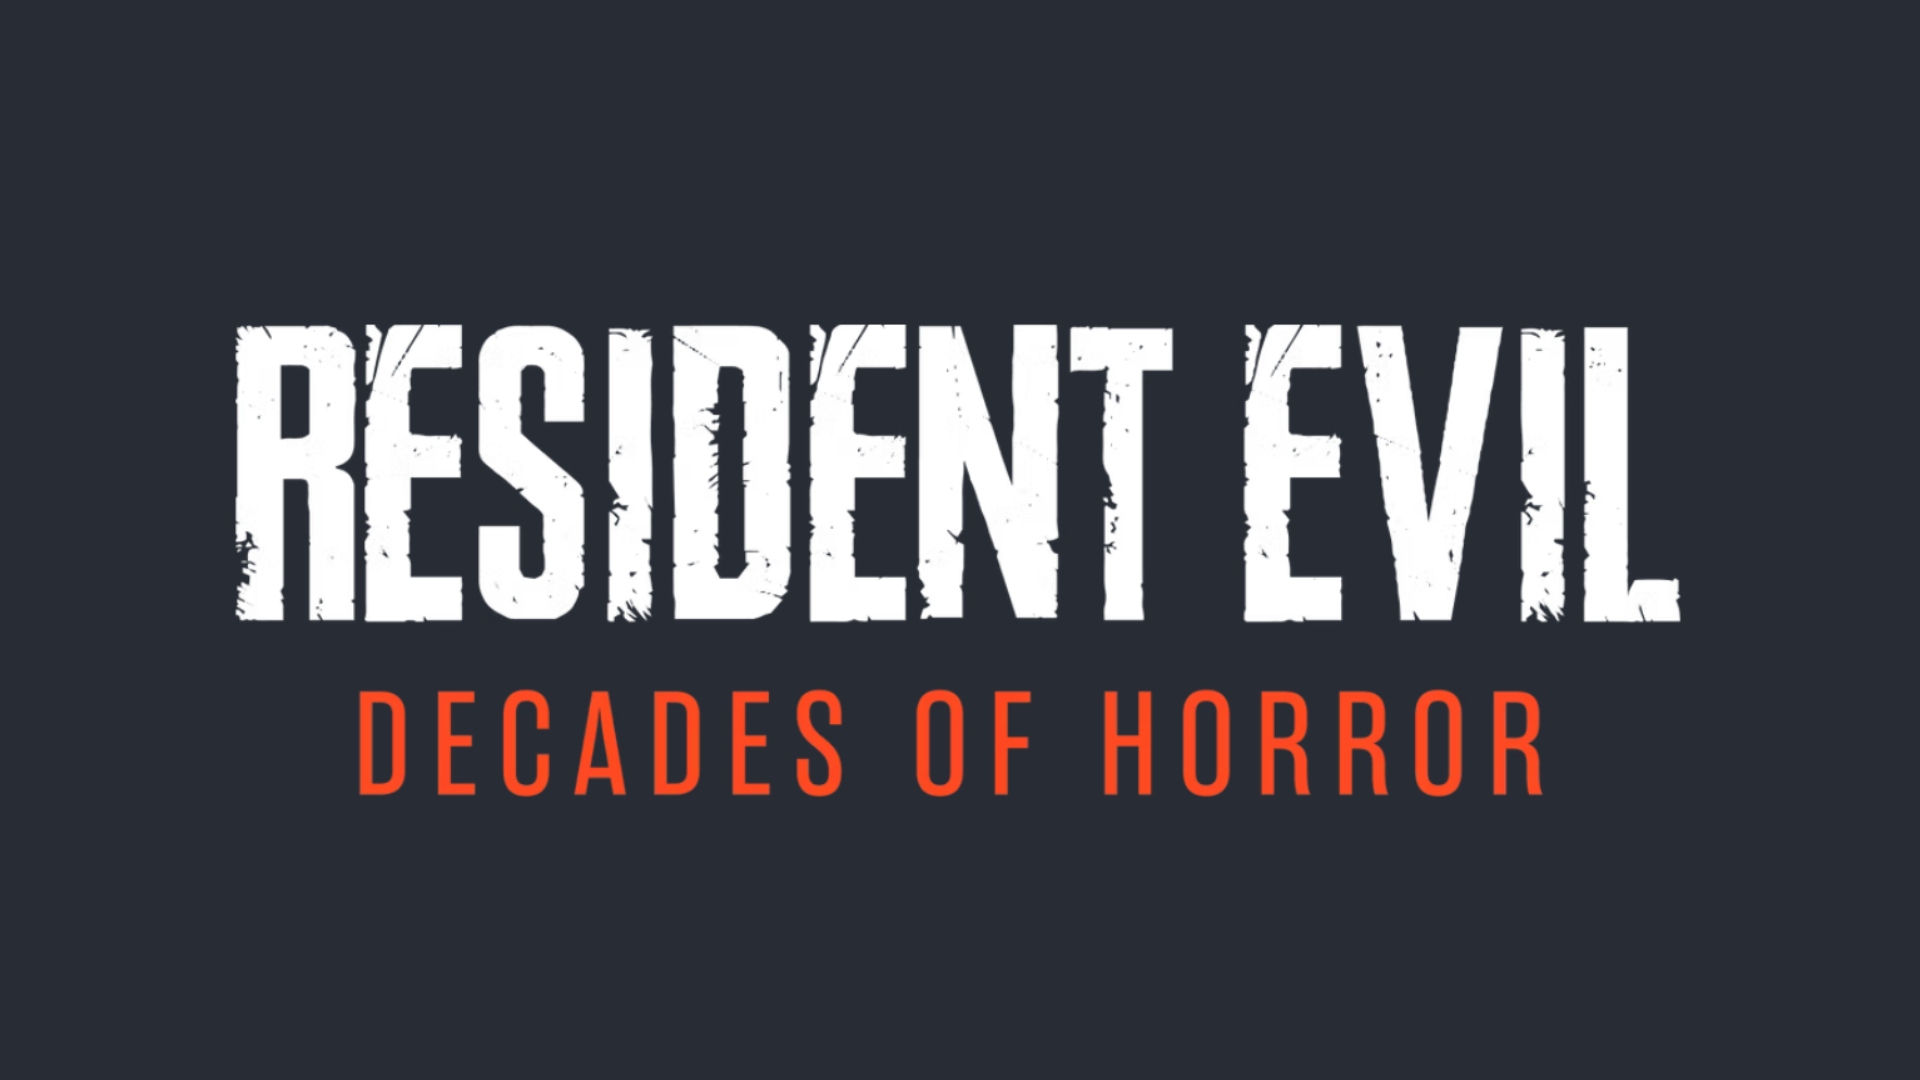 Resident Evil Decades of Horror